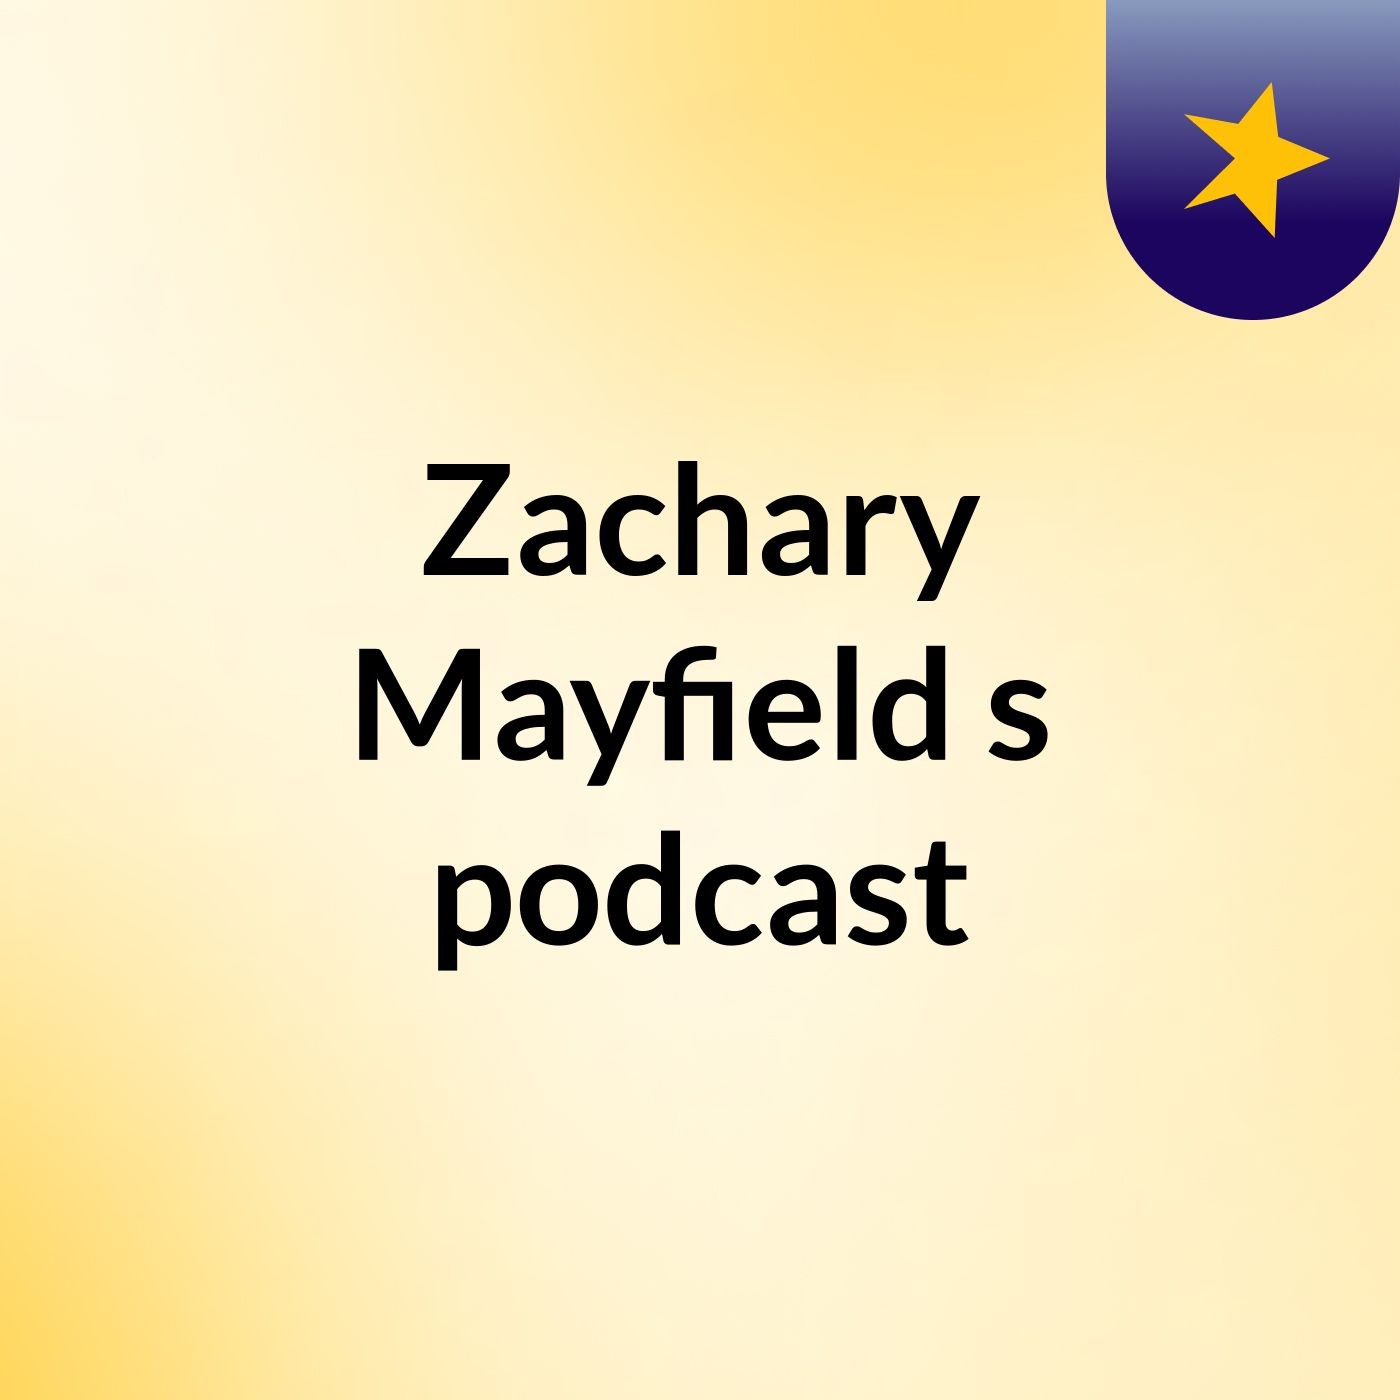 Zachary Mayfield's podcast